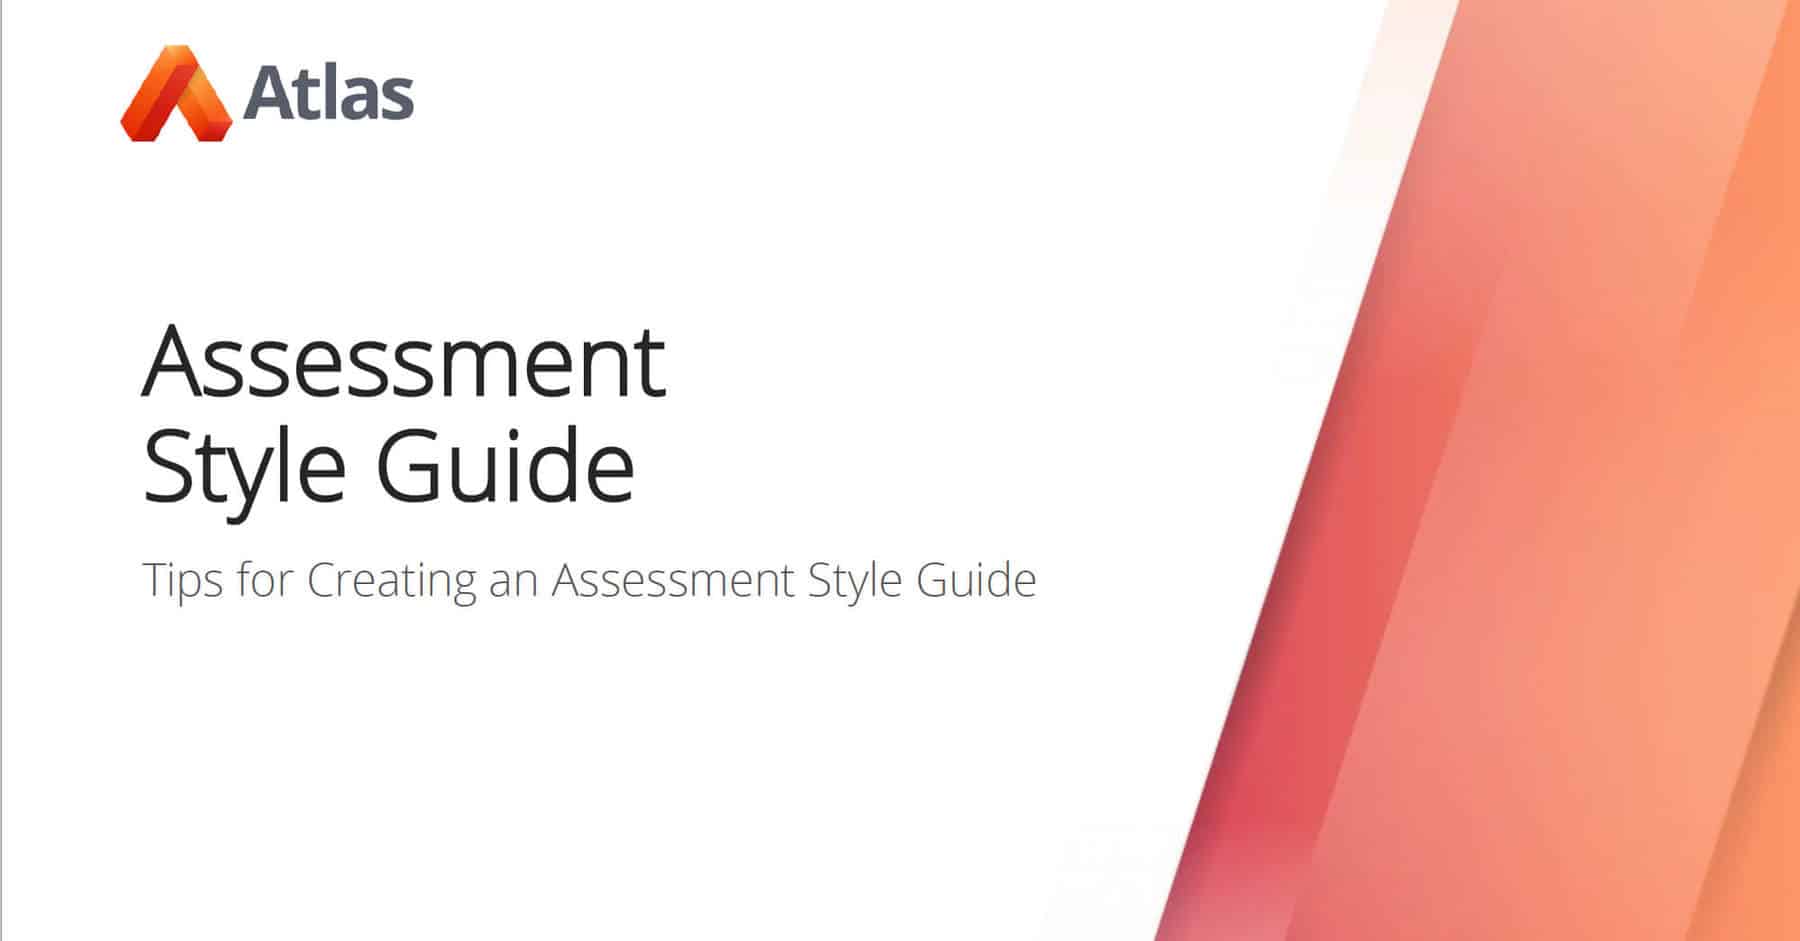 Atlas Assessment Style Guide